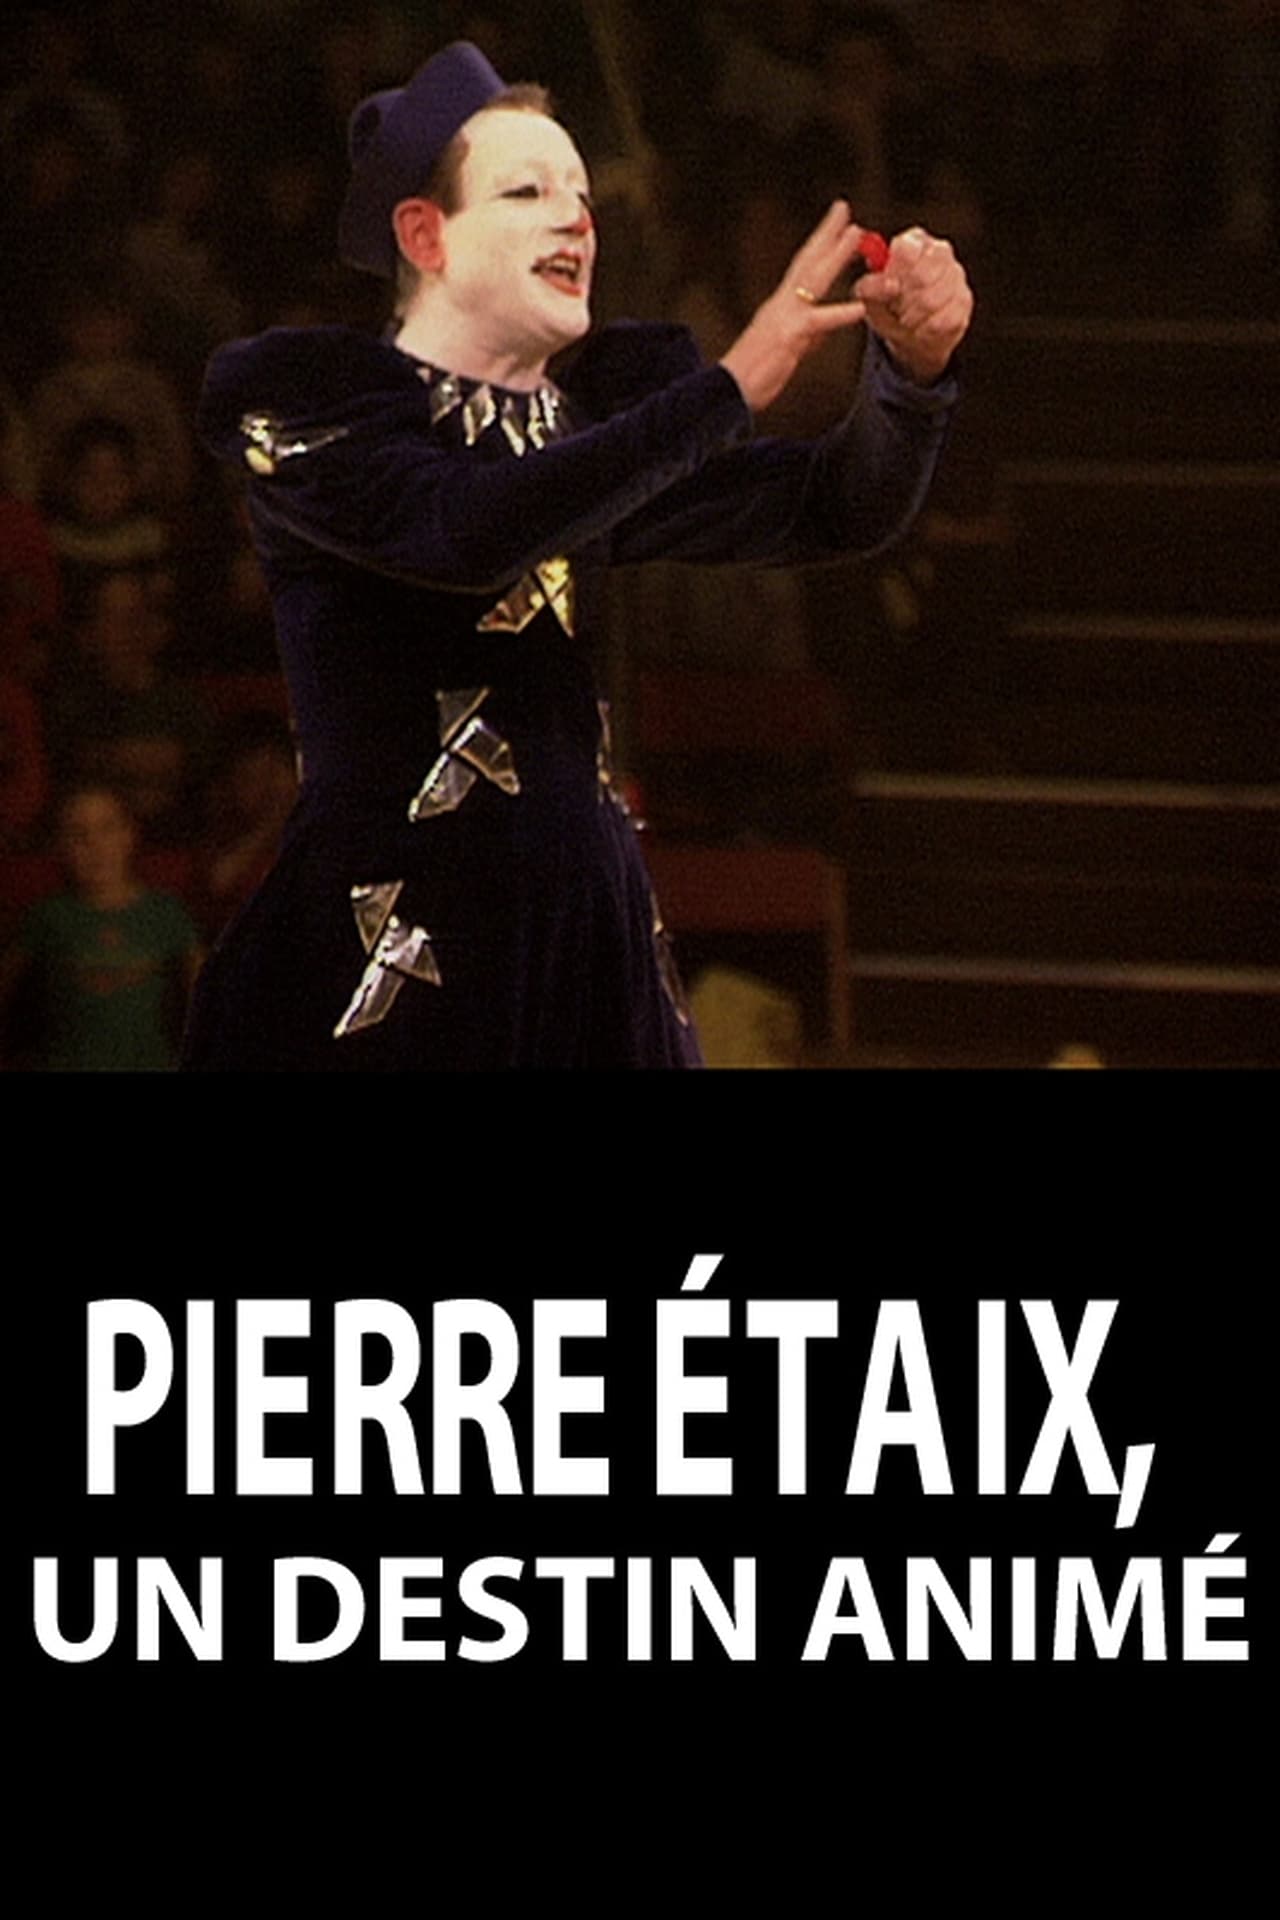 Pierre Étaix, un destin animé